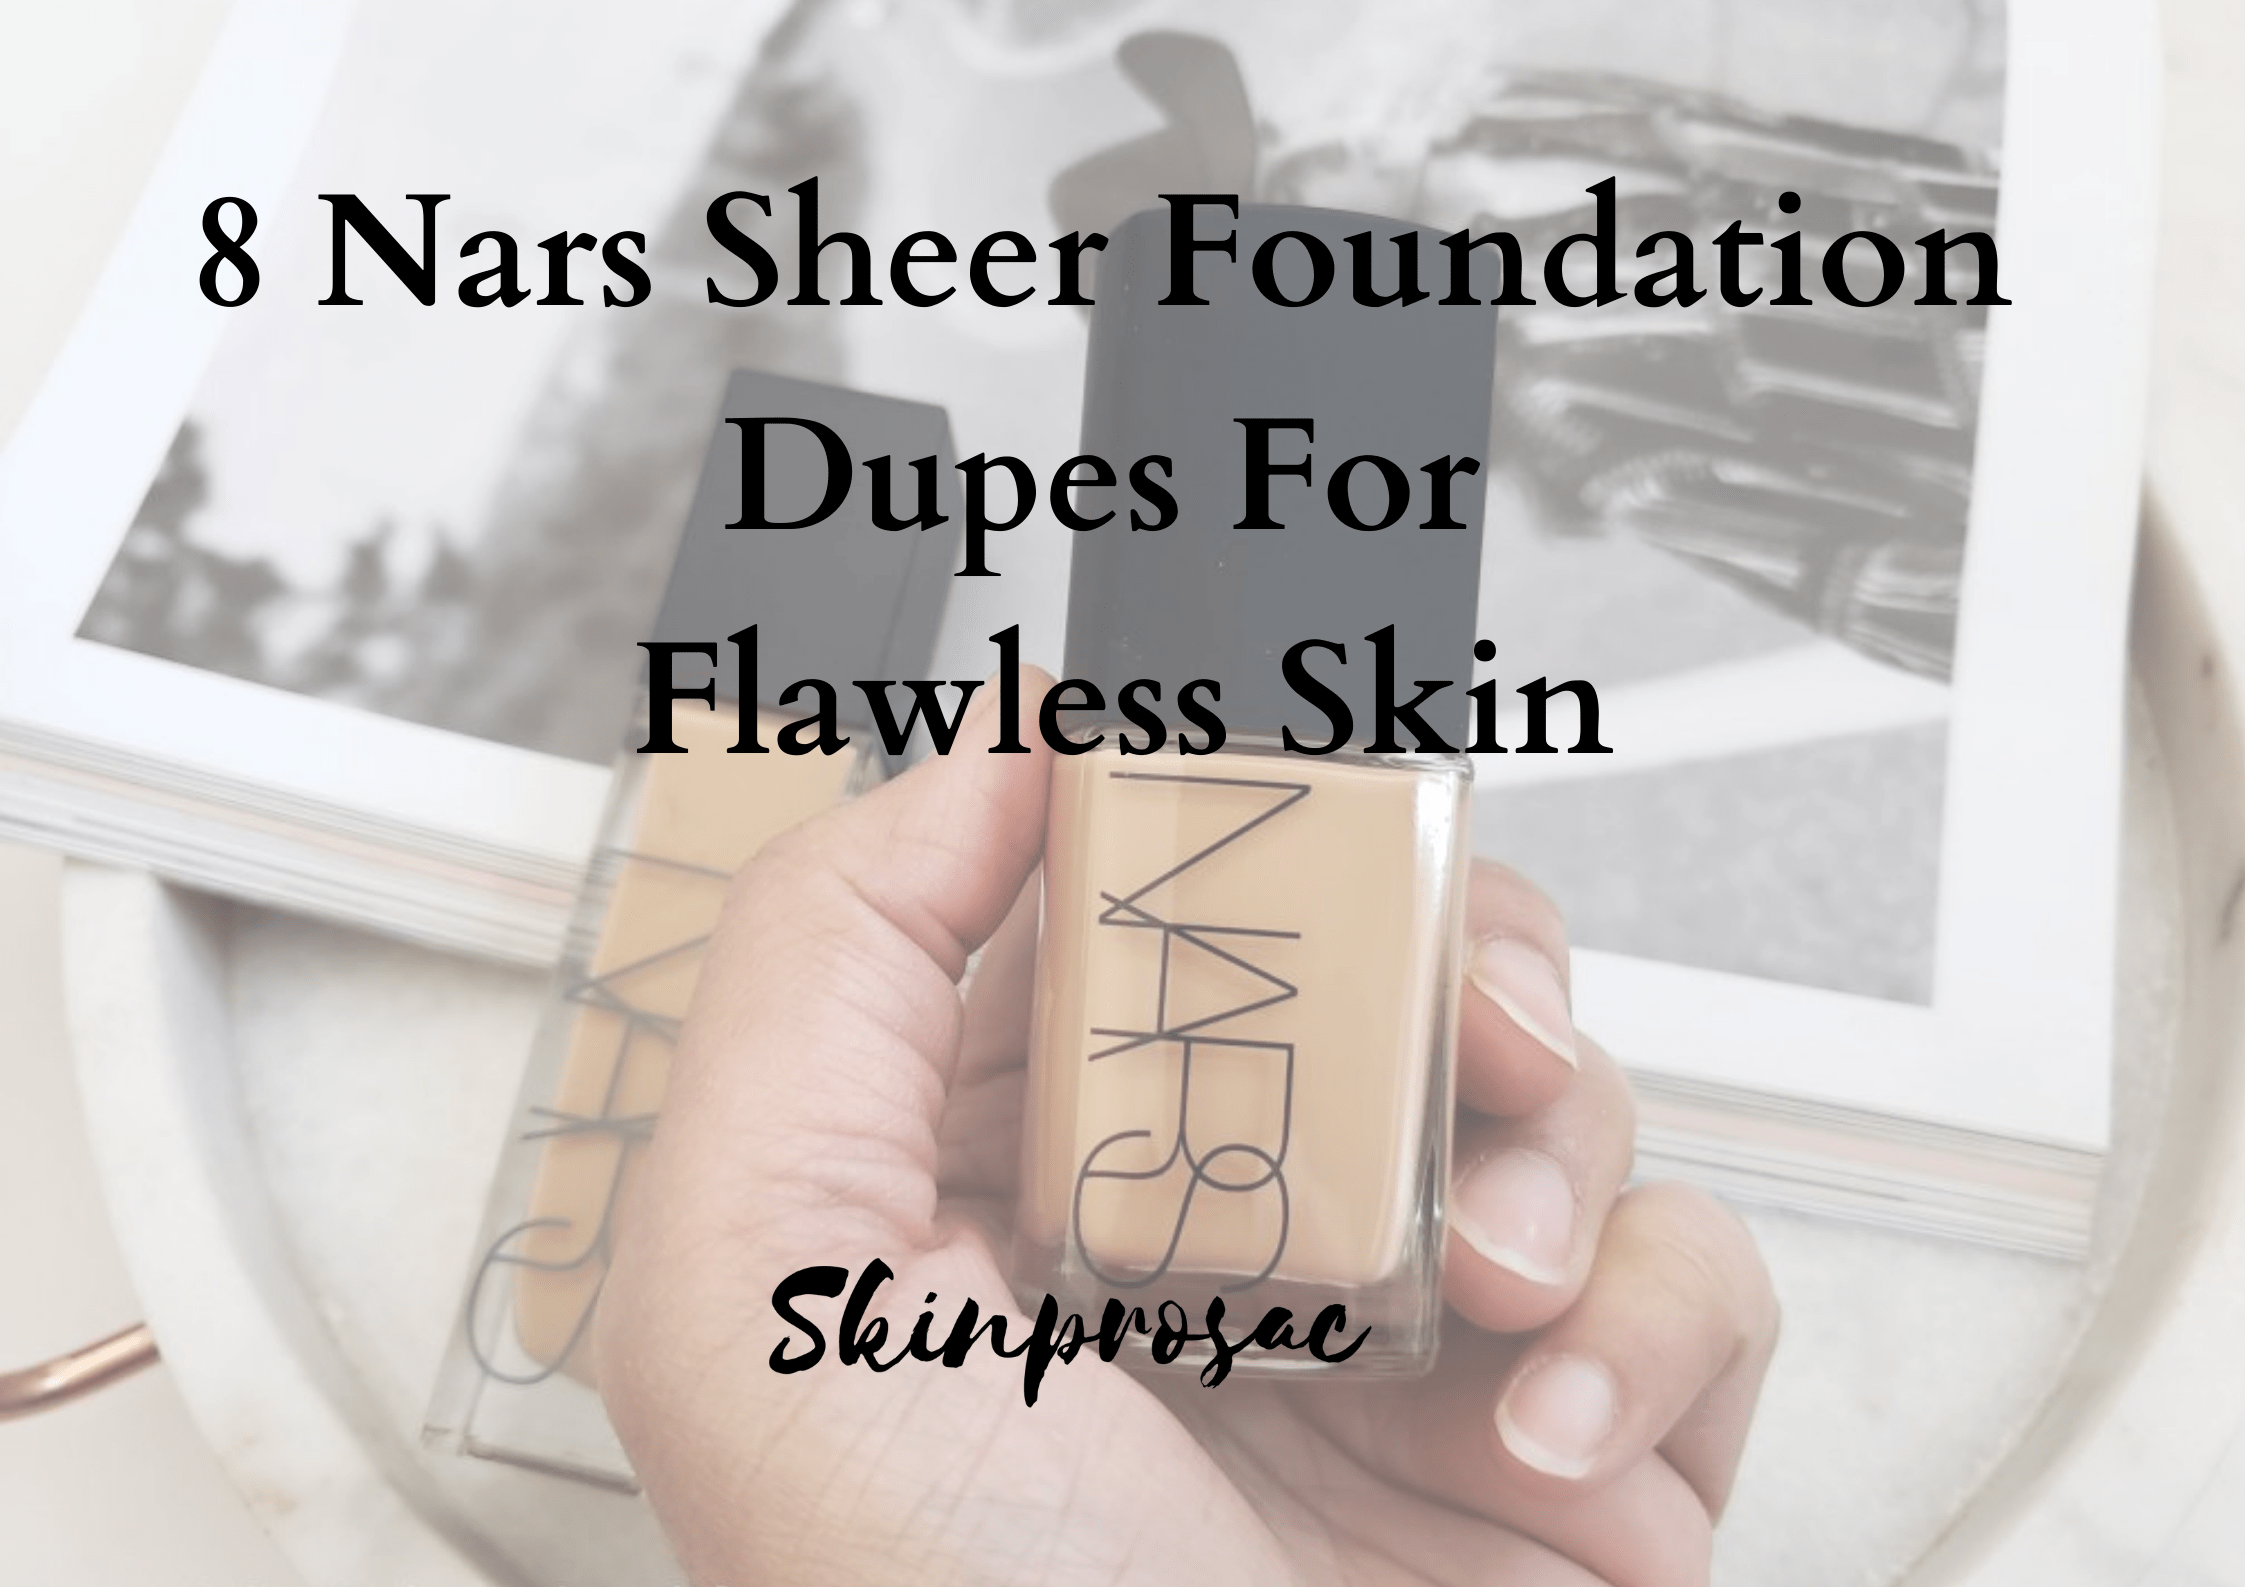 Nars Sheer Foundation Dupe